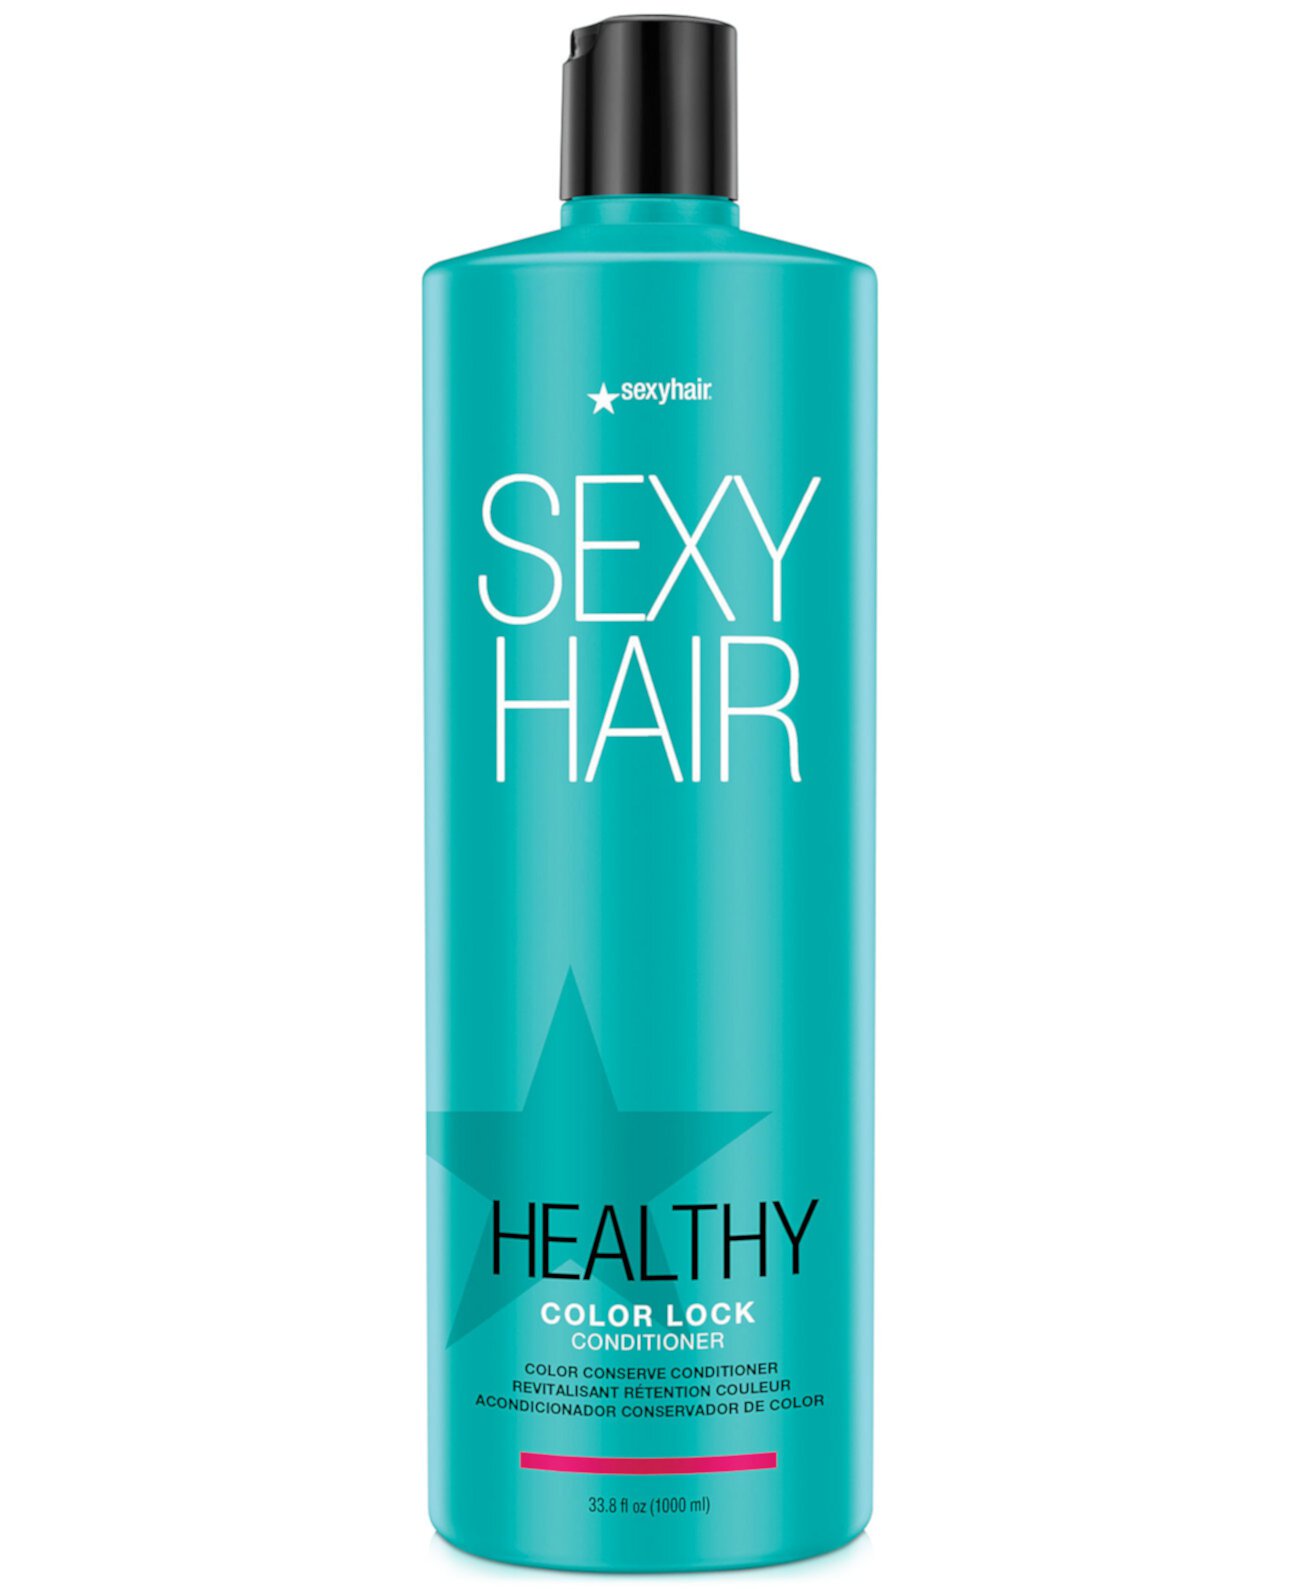 Кондиционер для волос Vibrant Sexy Hair Color Lock без сульфатов, 33,8 унции, от PUREBEAUTY Salon & Spa Sexy Hair